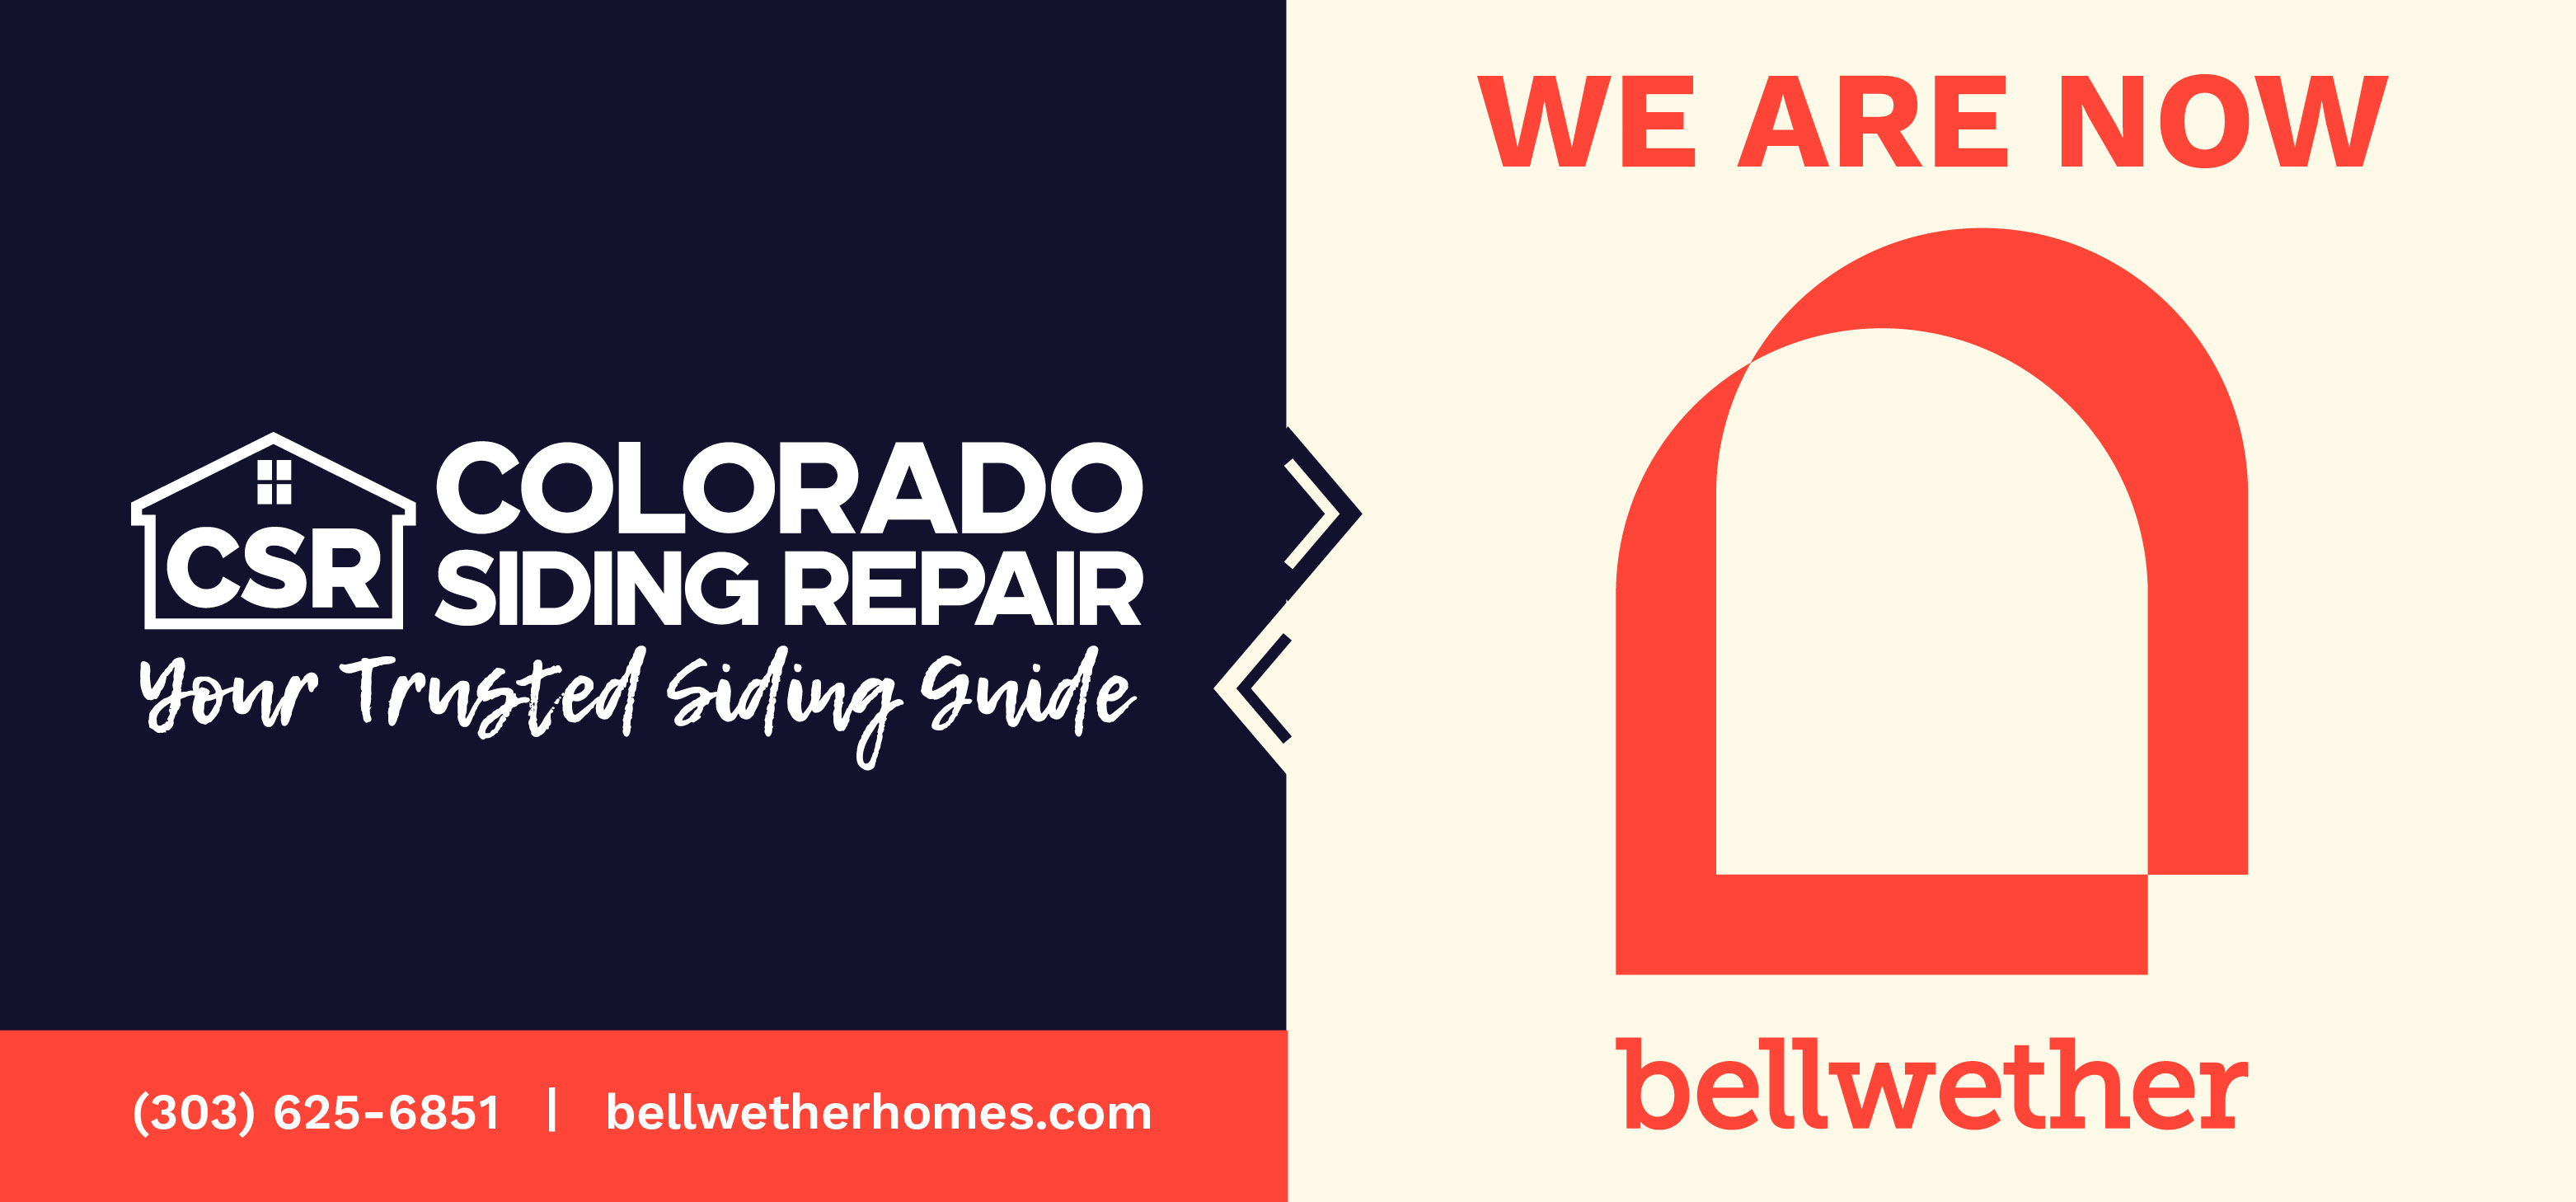 Colorado Siding Repair now Bellwether!